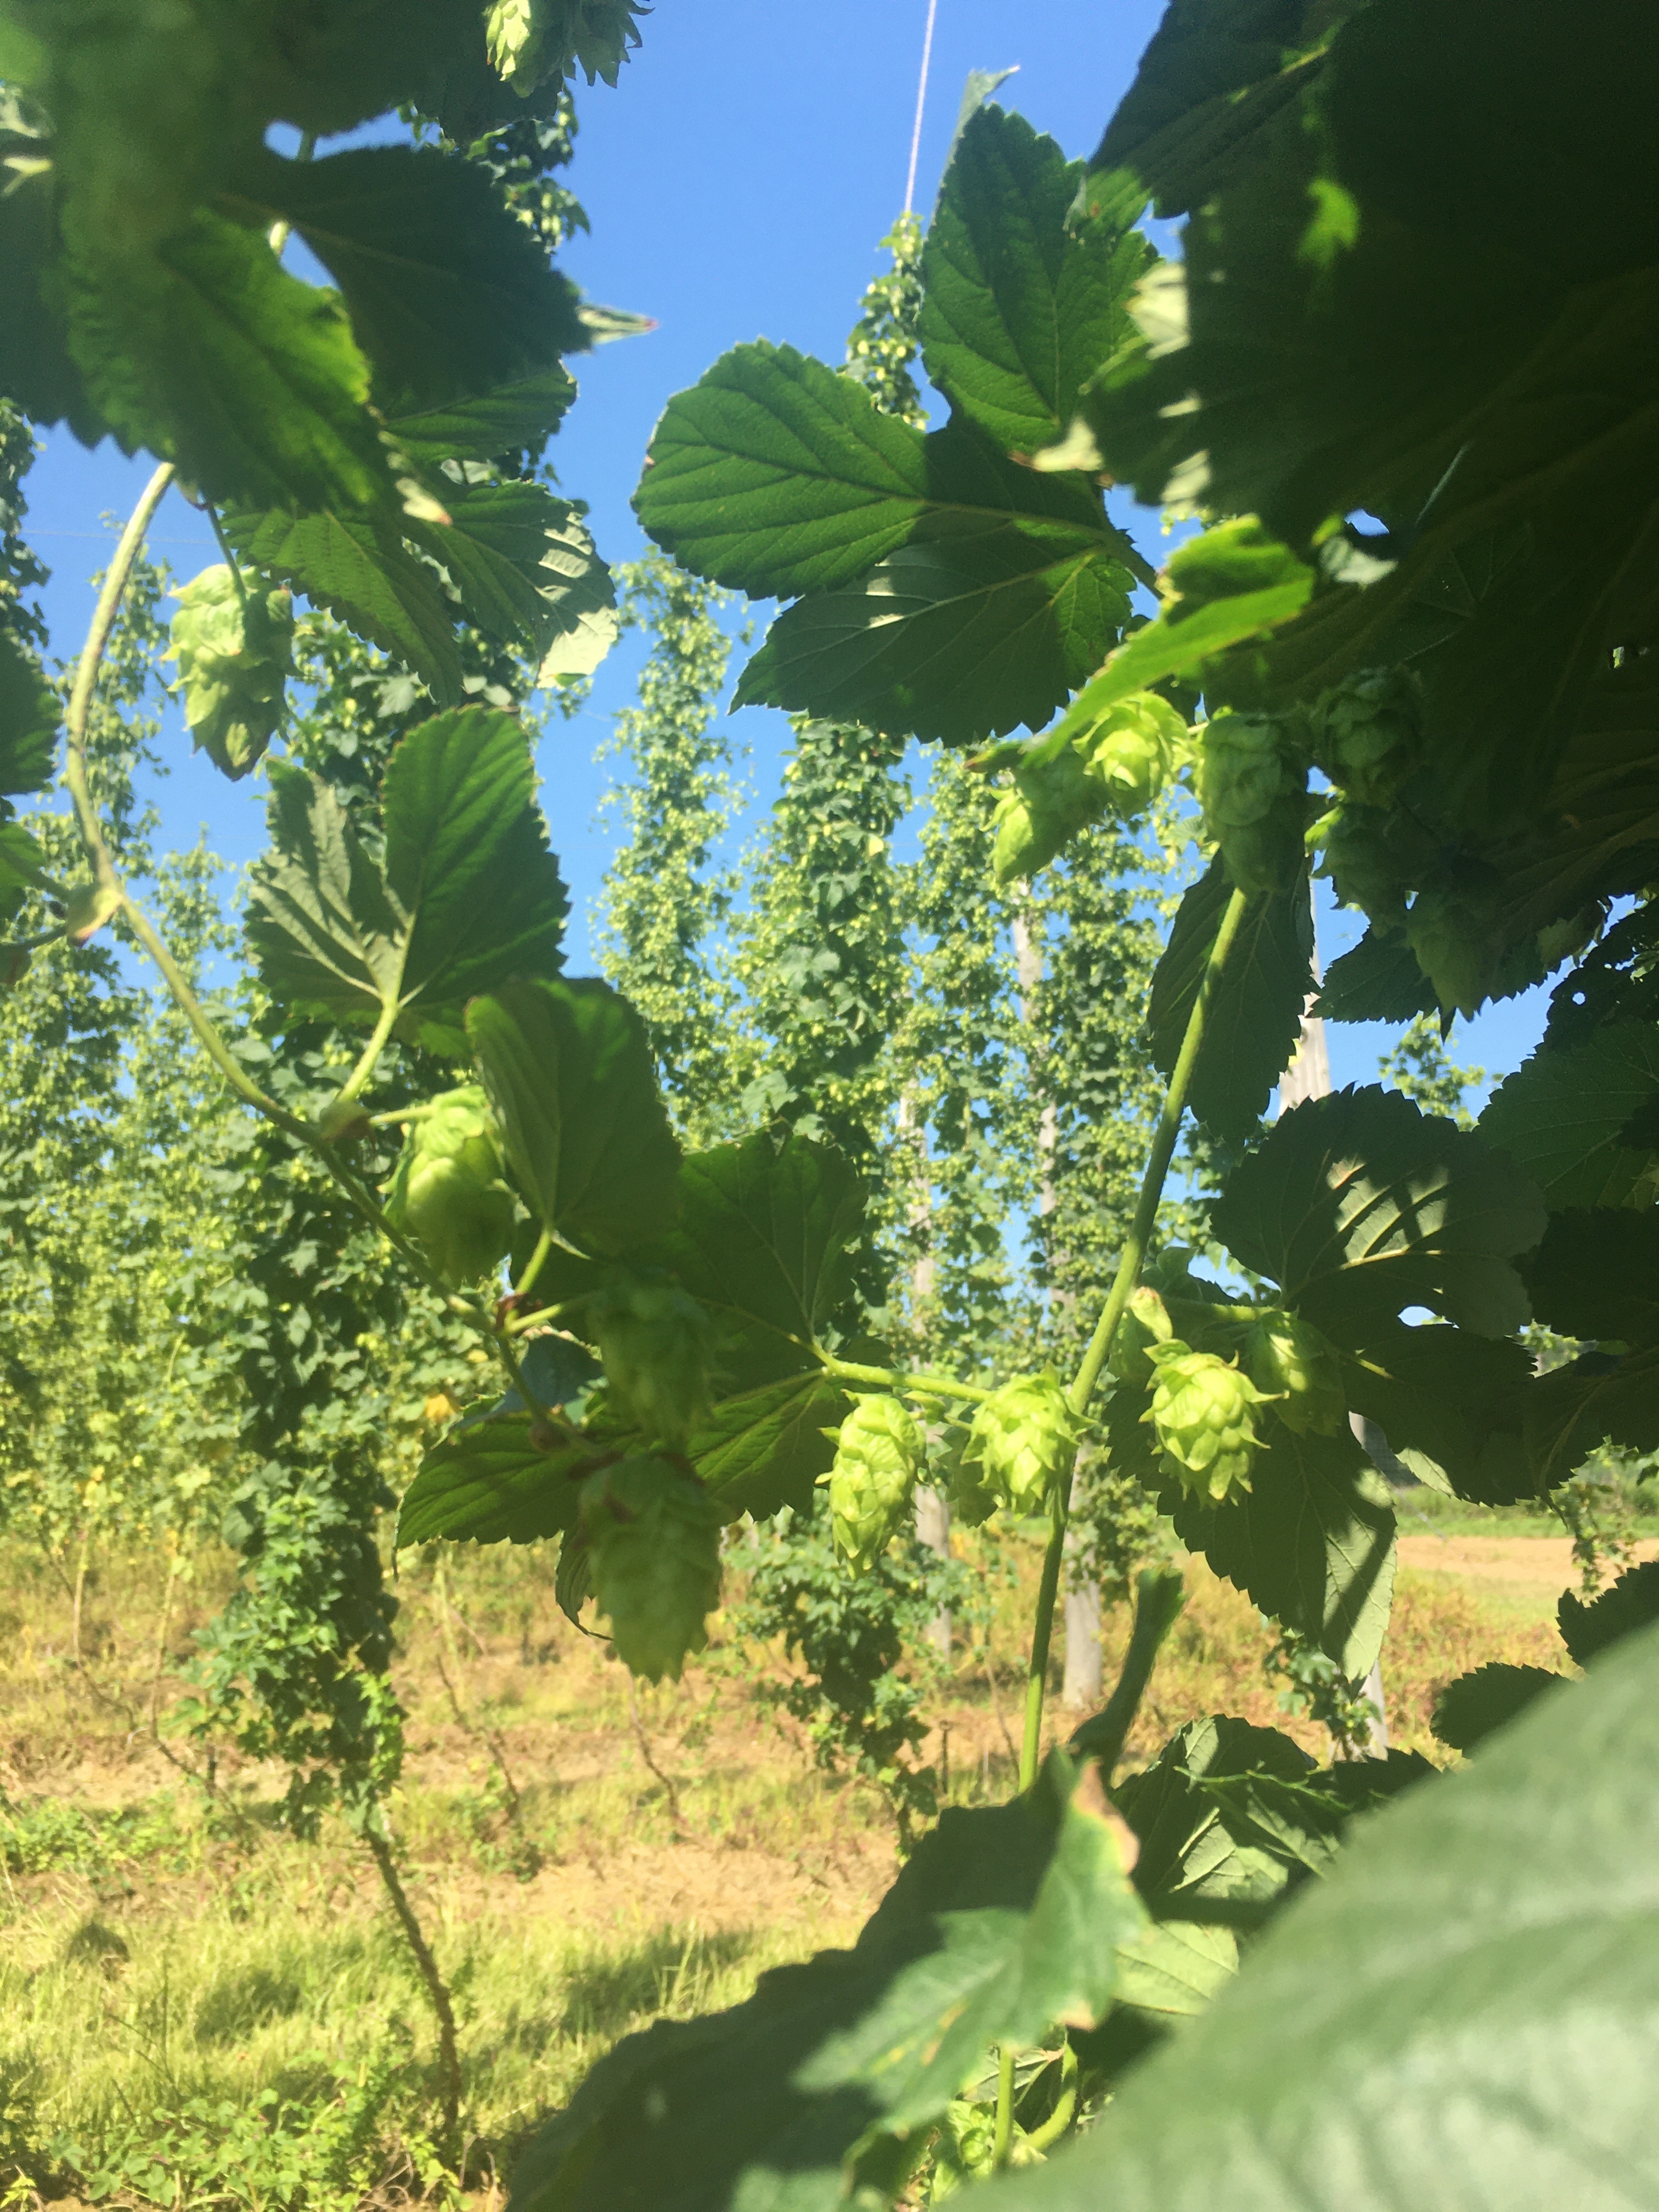 hops on the vine at Condzella farm